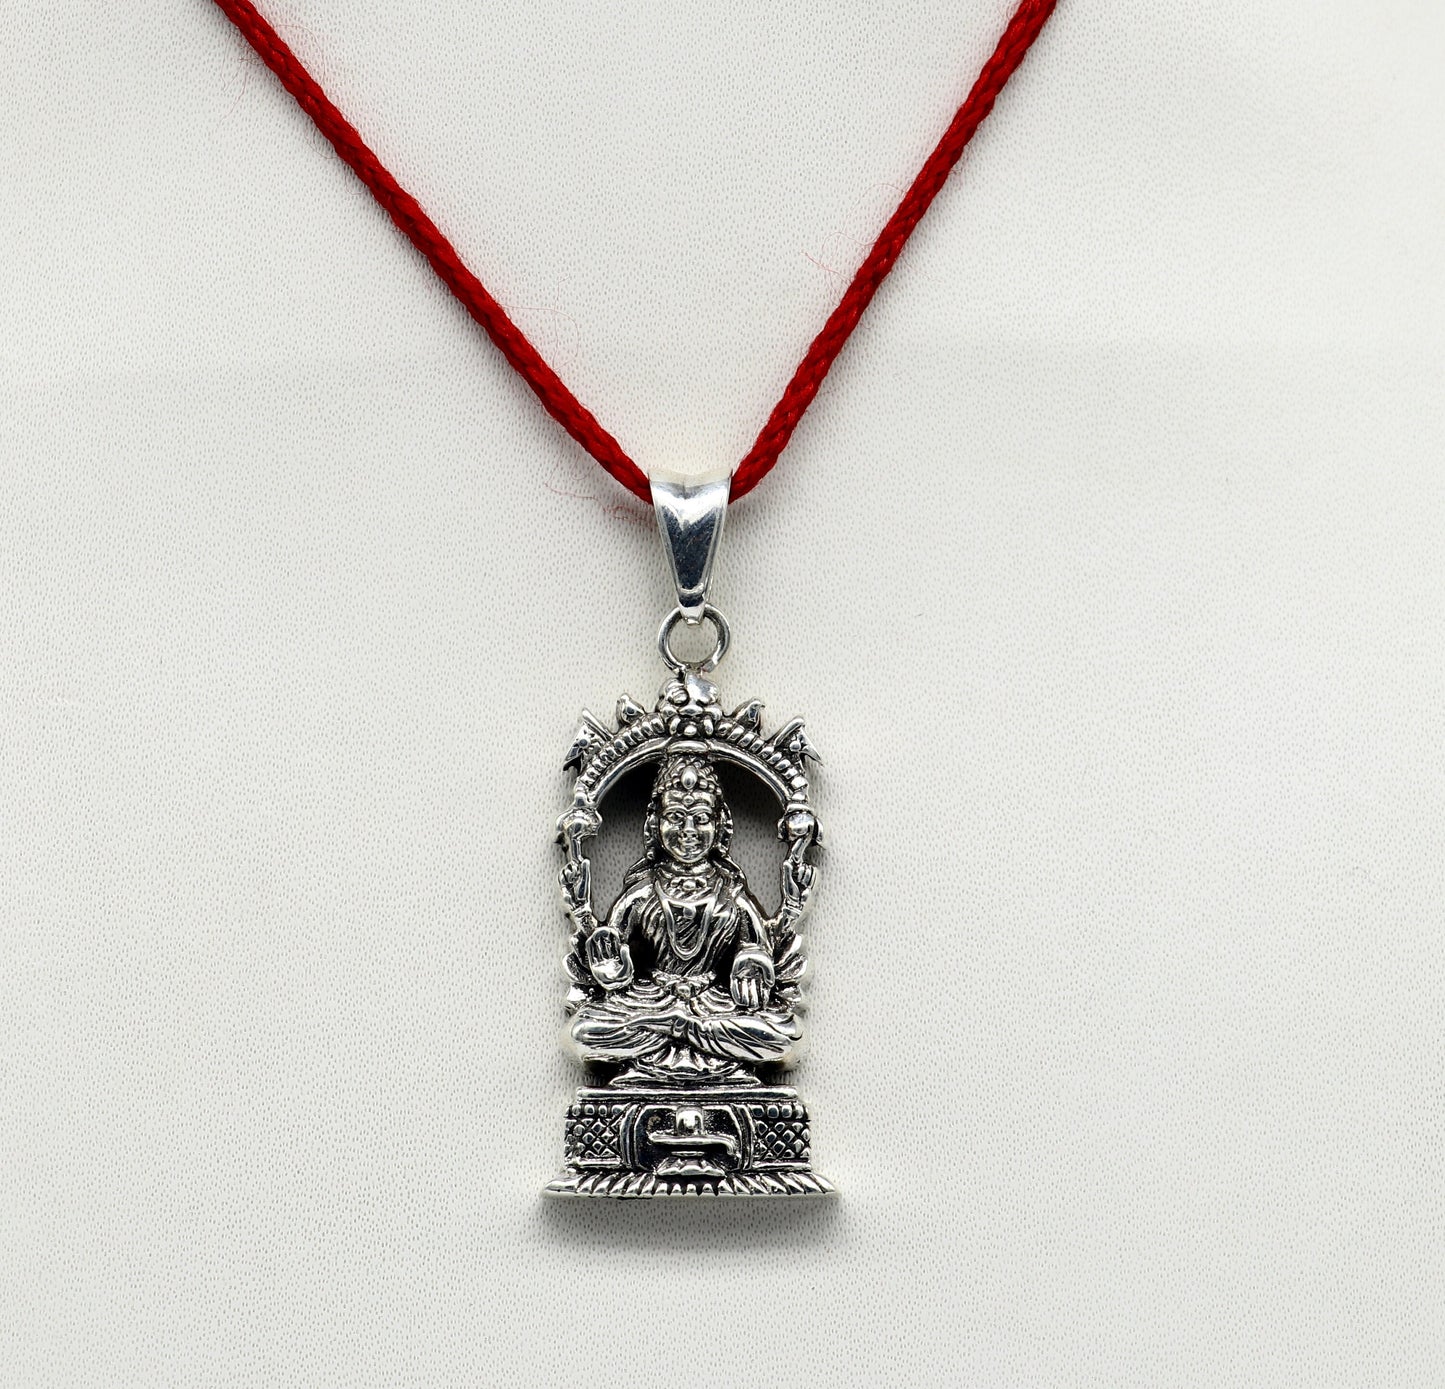 Pure 925 sterling silver vintage Antique stylish Hindu goddess Laxmi Pendant, amazing design stunning pendant unisex gifting jewelry ssp530 - TRIBAL ORNAMENTS